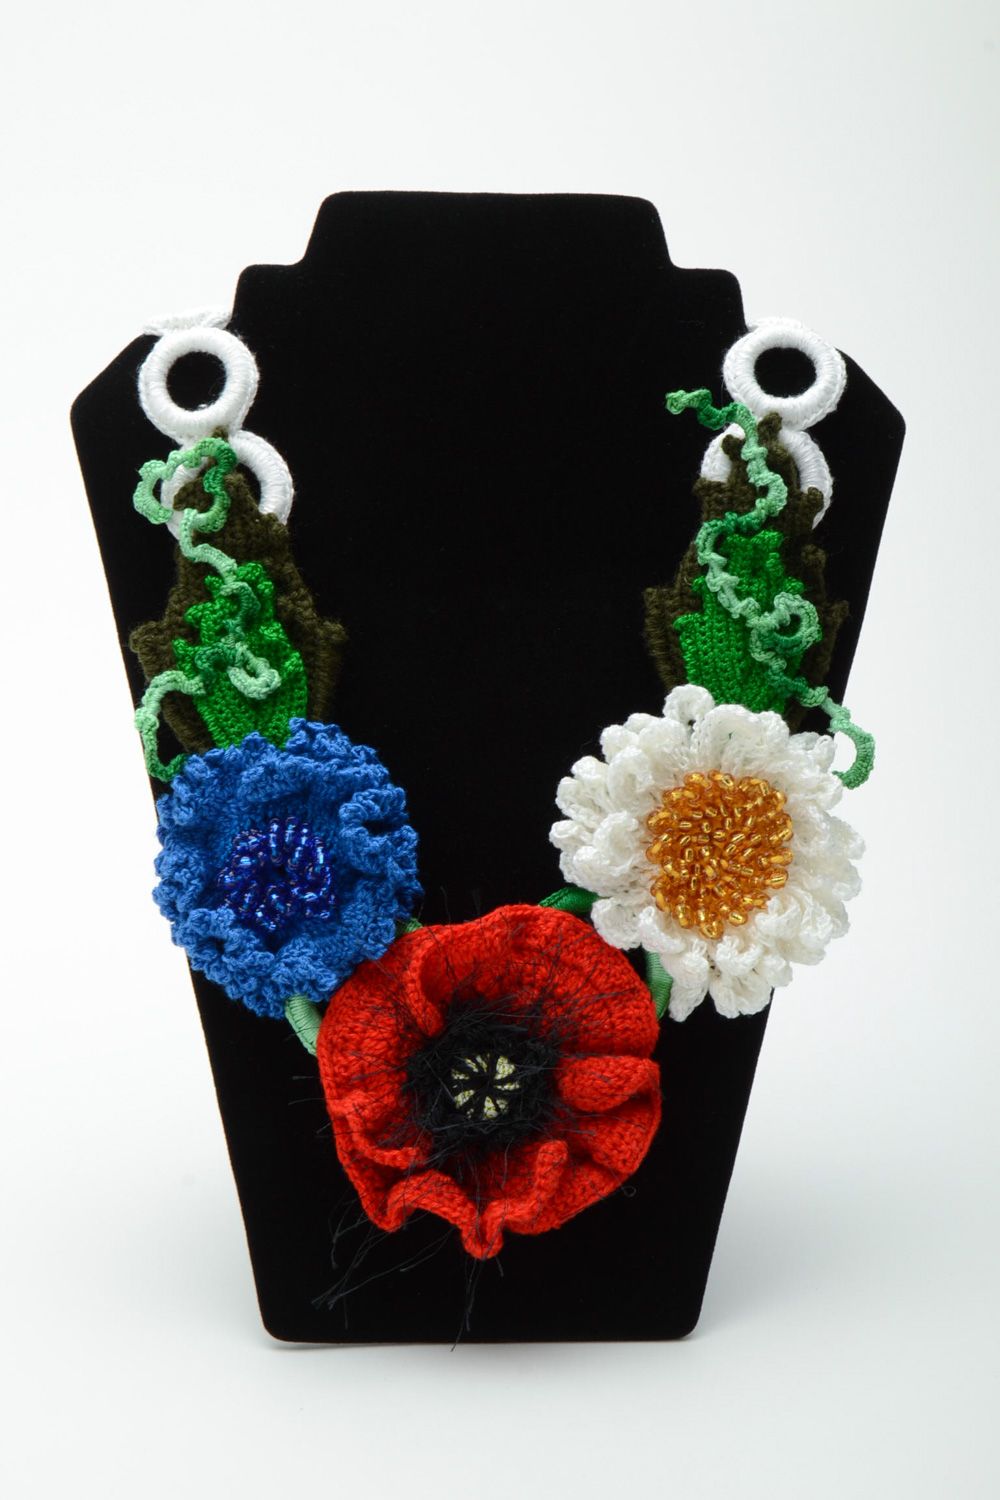 Homemade crochet textile flower necklace photo 1